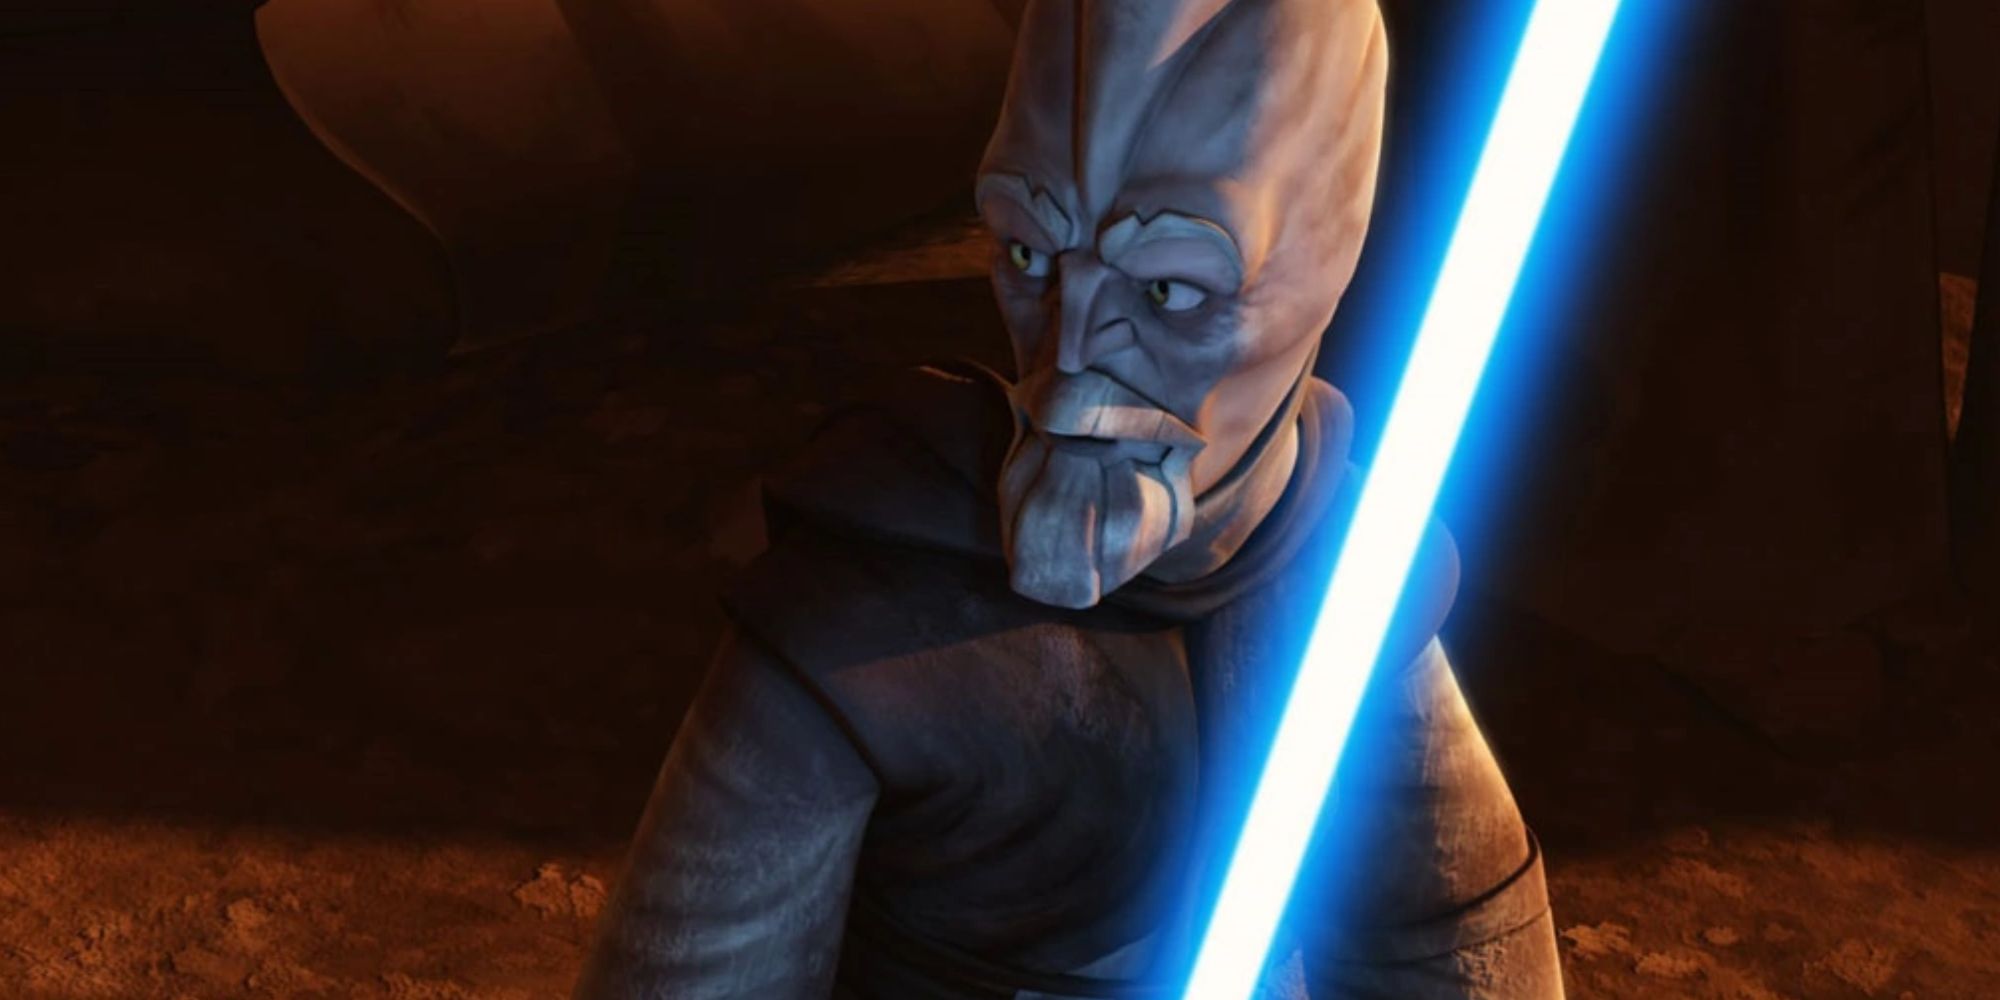 Jedi Master Ki-Adi-Mundi with his lightsaber from Star Wars The Clone Wars